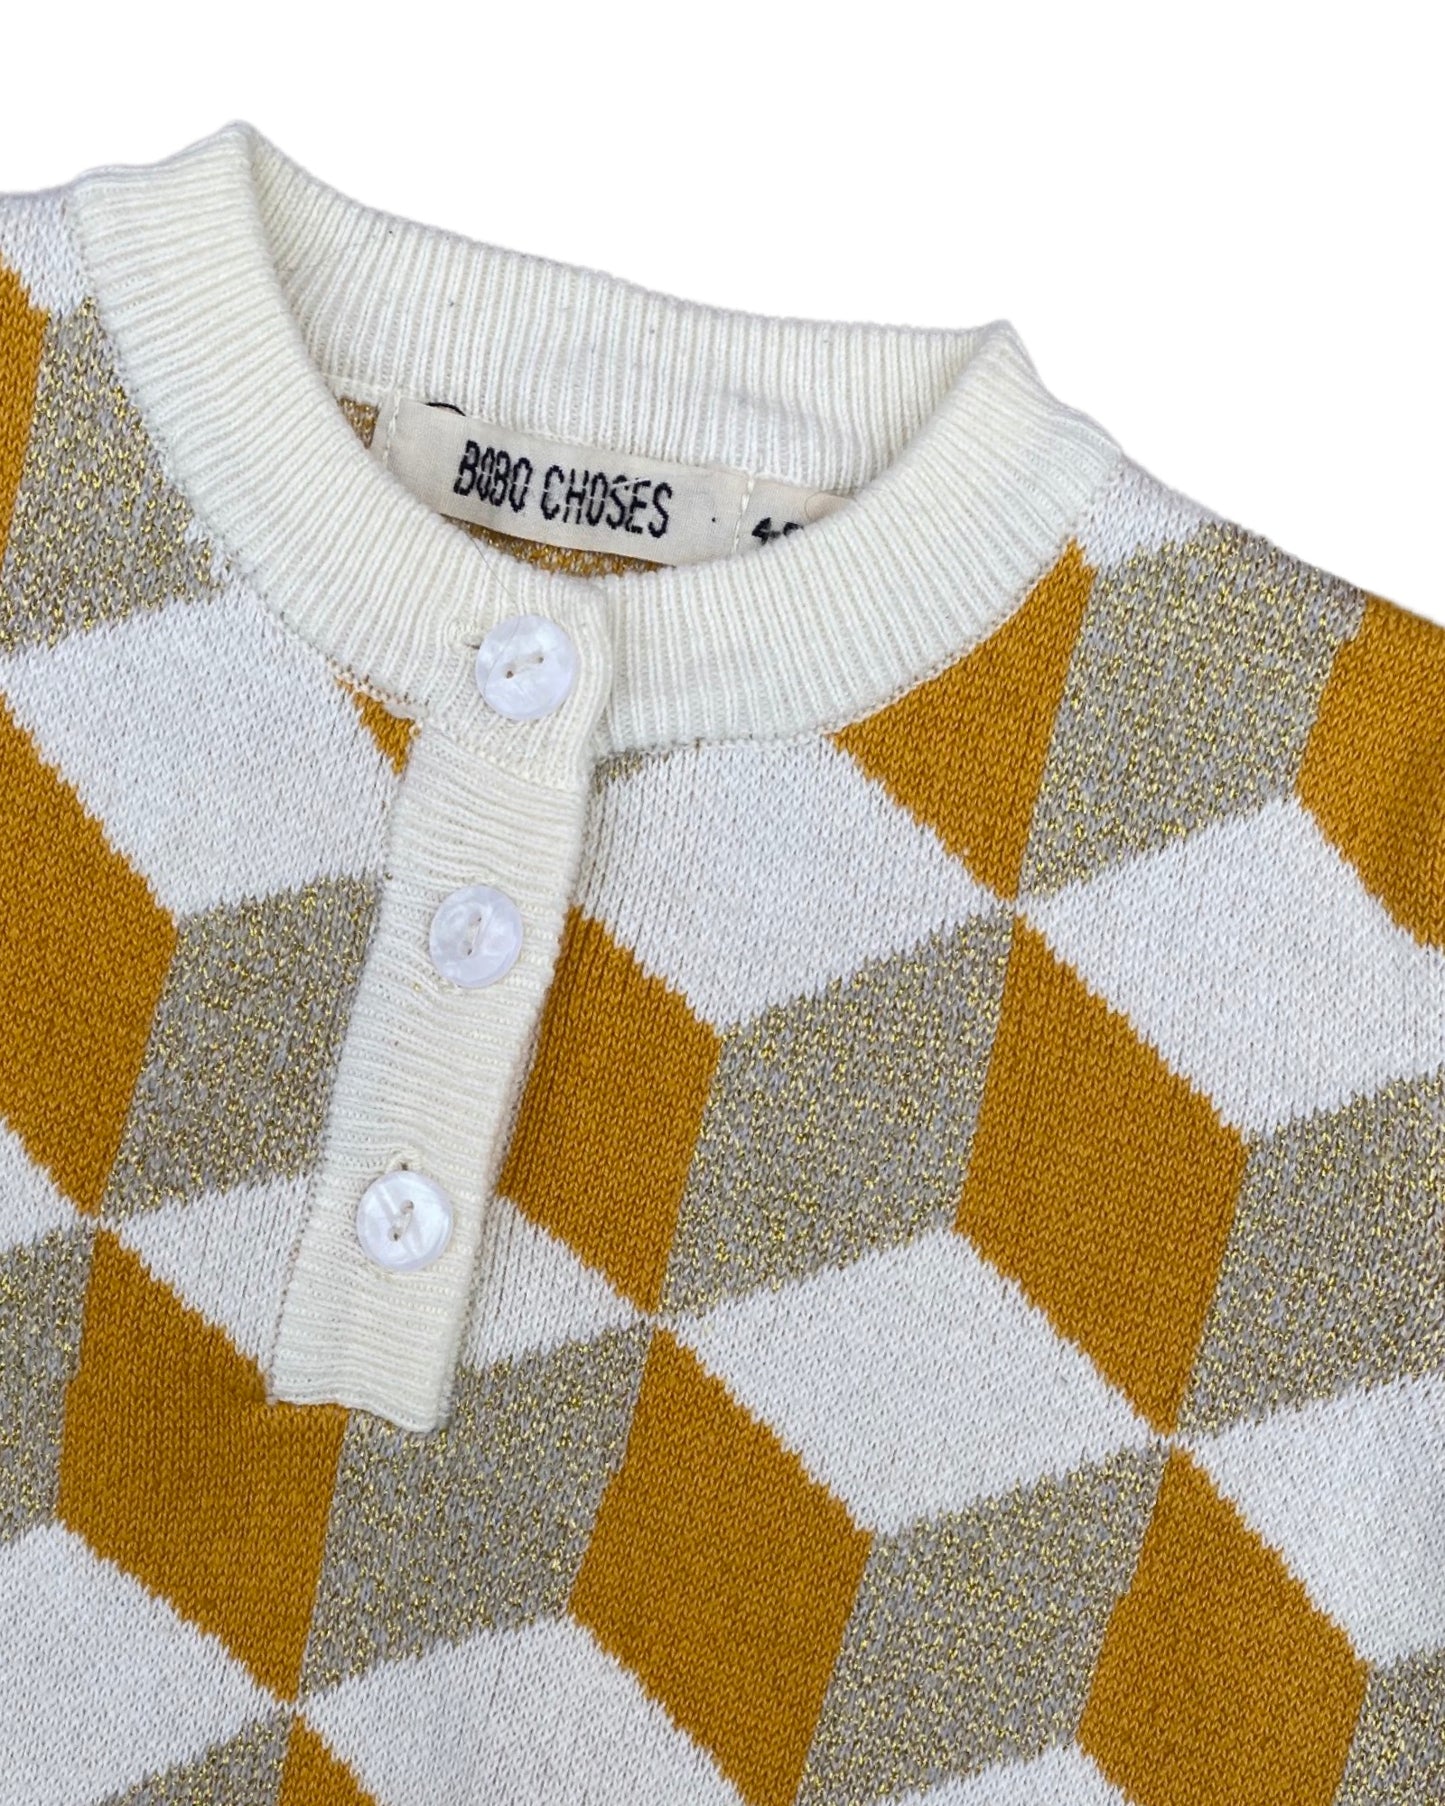 Bobo Choses diamond cut knitted jumper (4-5yrs)